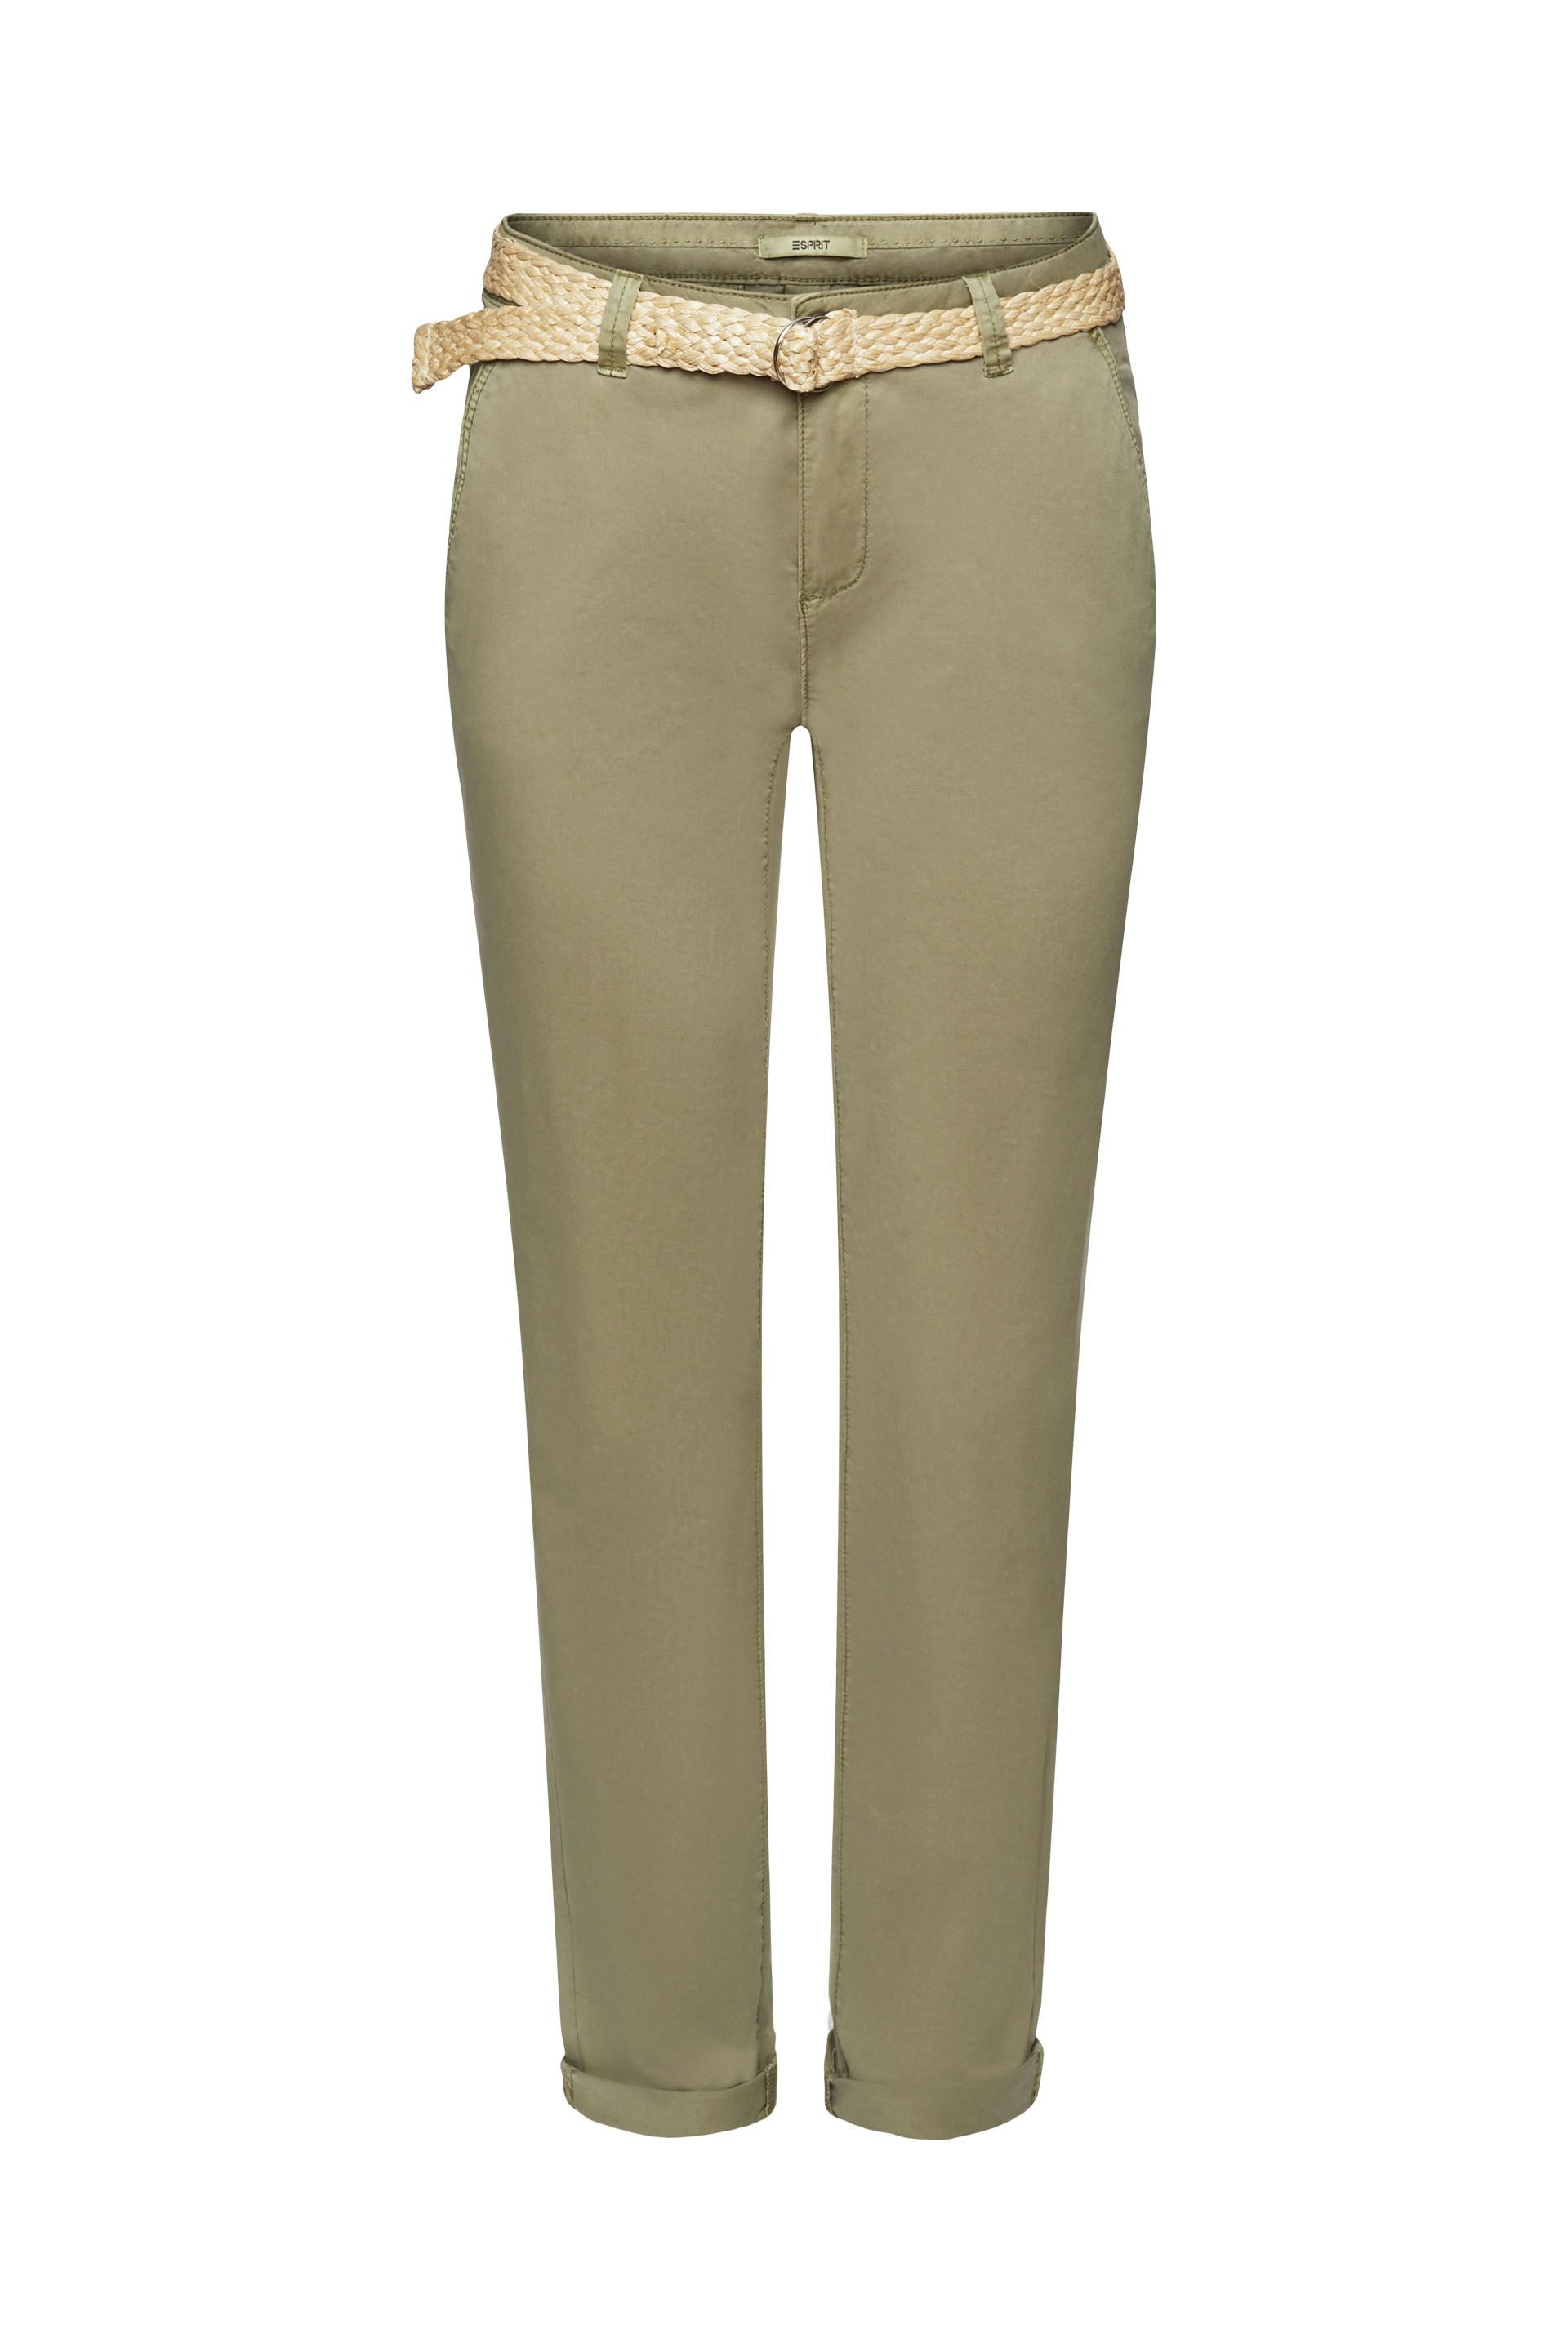 Esprit - Pantaloni chino cropped con cintura, Verde salvia, large image number 0